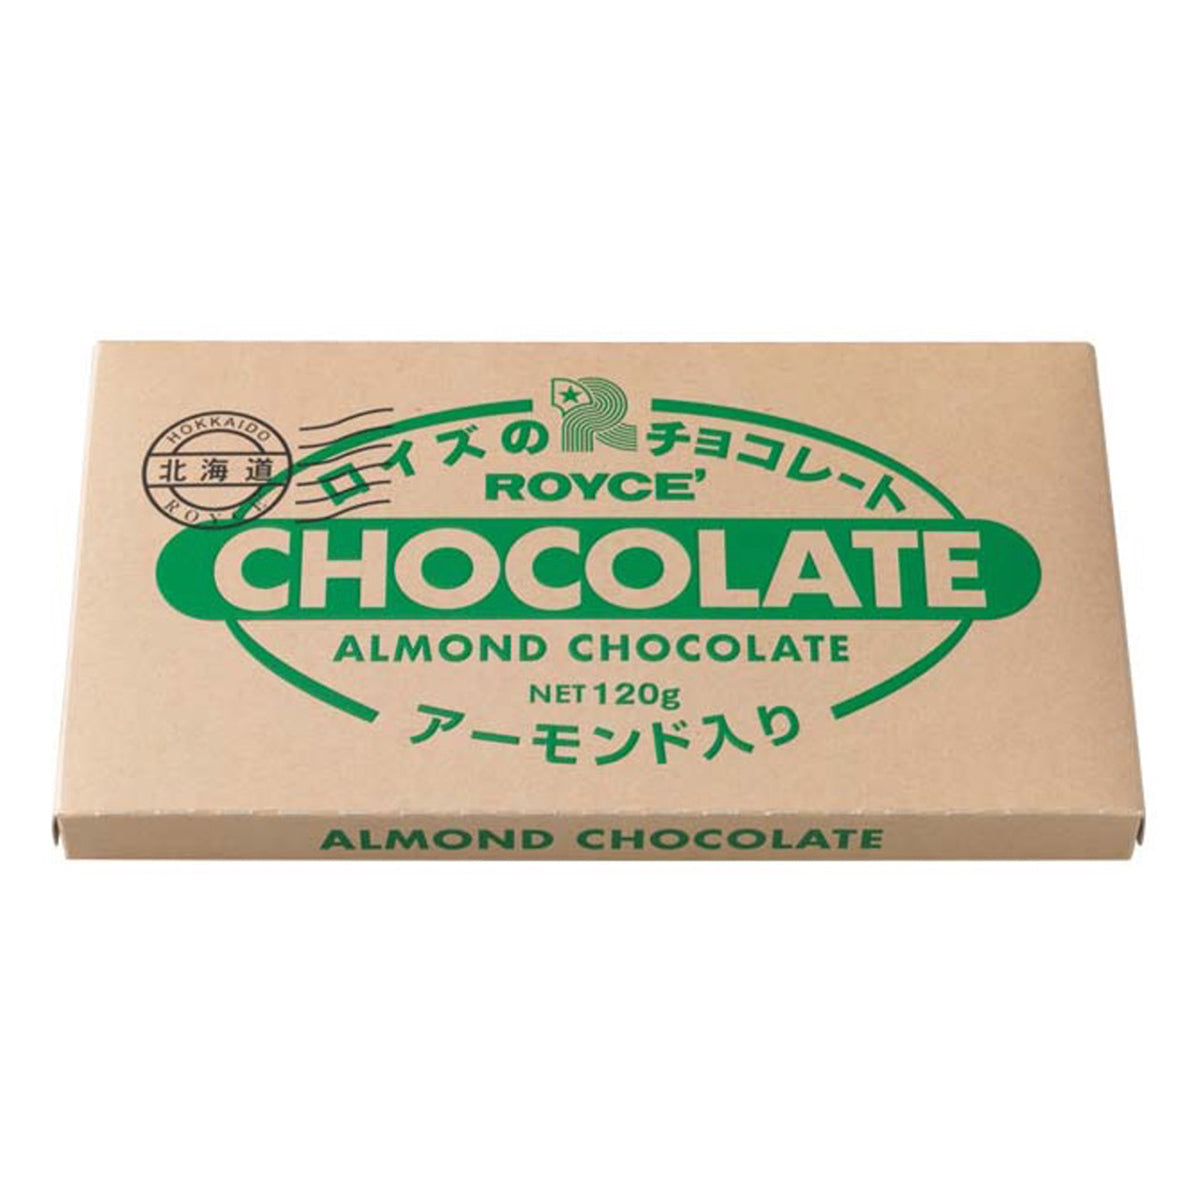 ROYCE' Chocolate - Chocolate Bar "Almond" - Image shows a chocolate carton. Text in black says Hokkaido ROYCE'. Text in green says ROYCE' Chocolate Almond Chocolate Net 120g. Text on bottom part says Almond Chocolate.